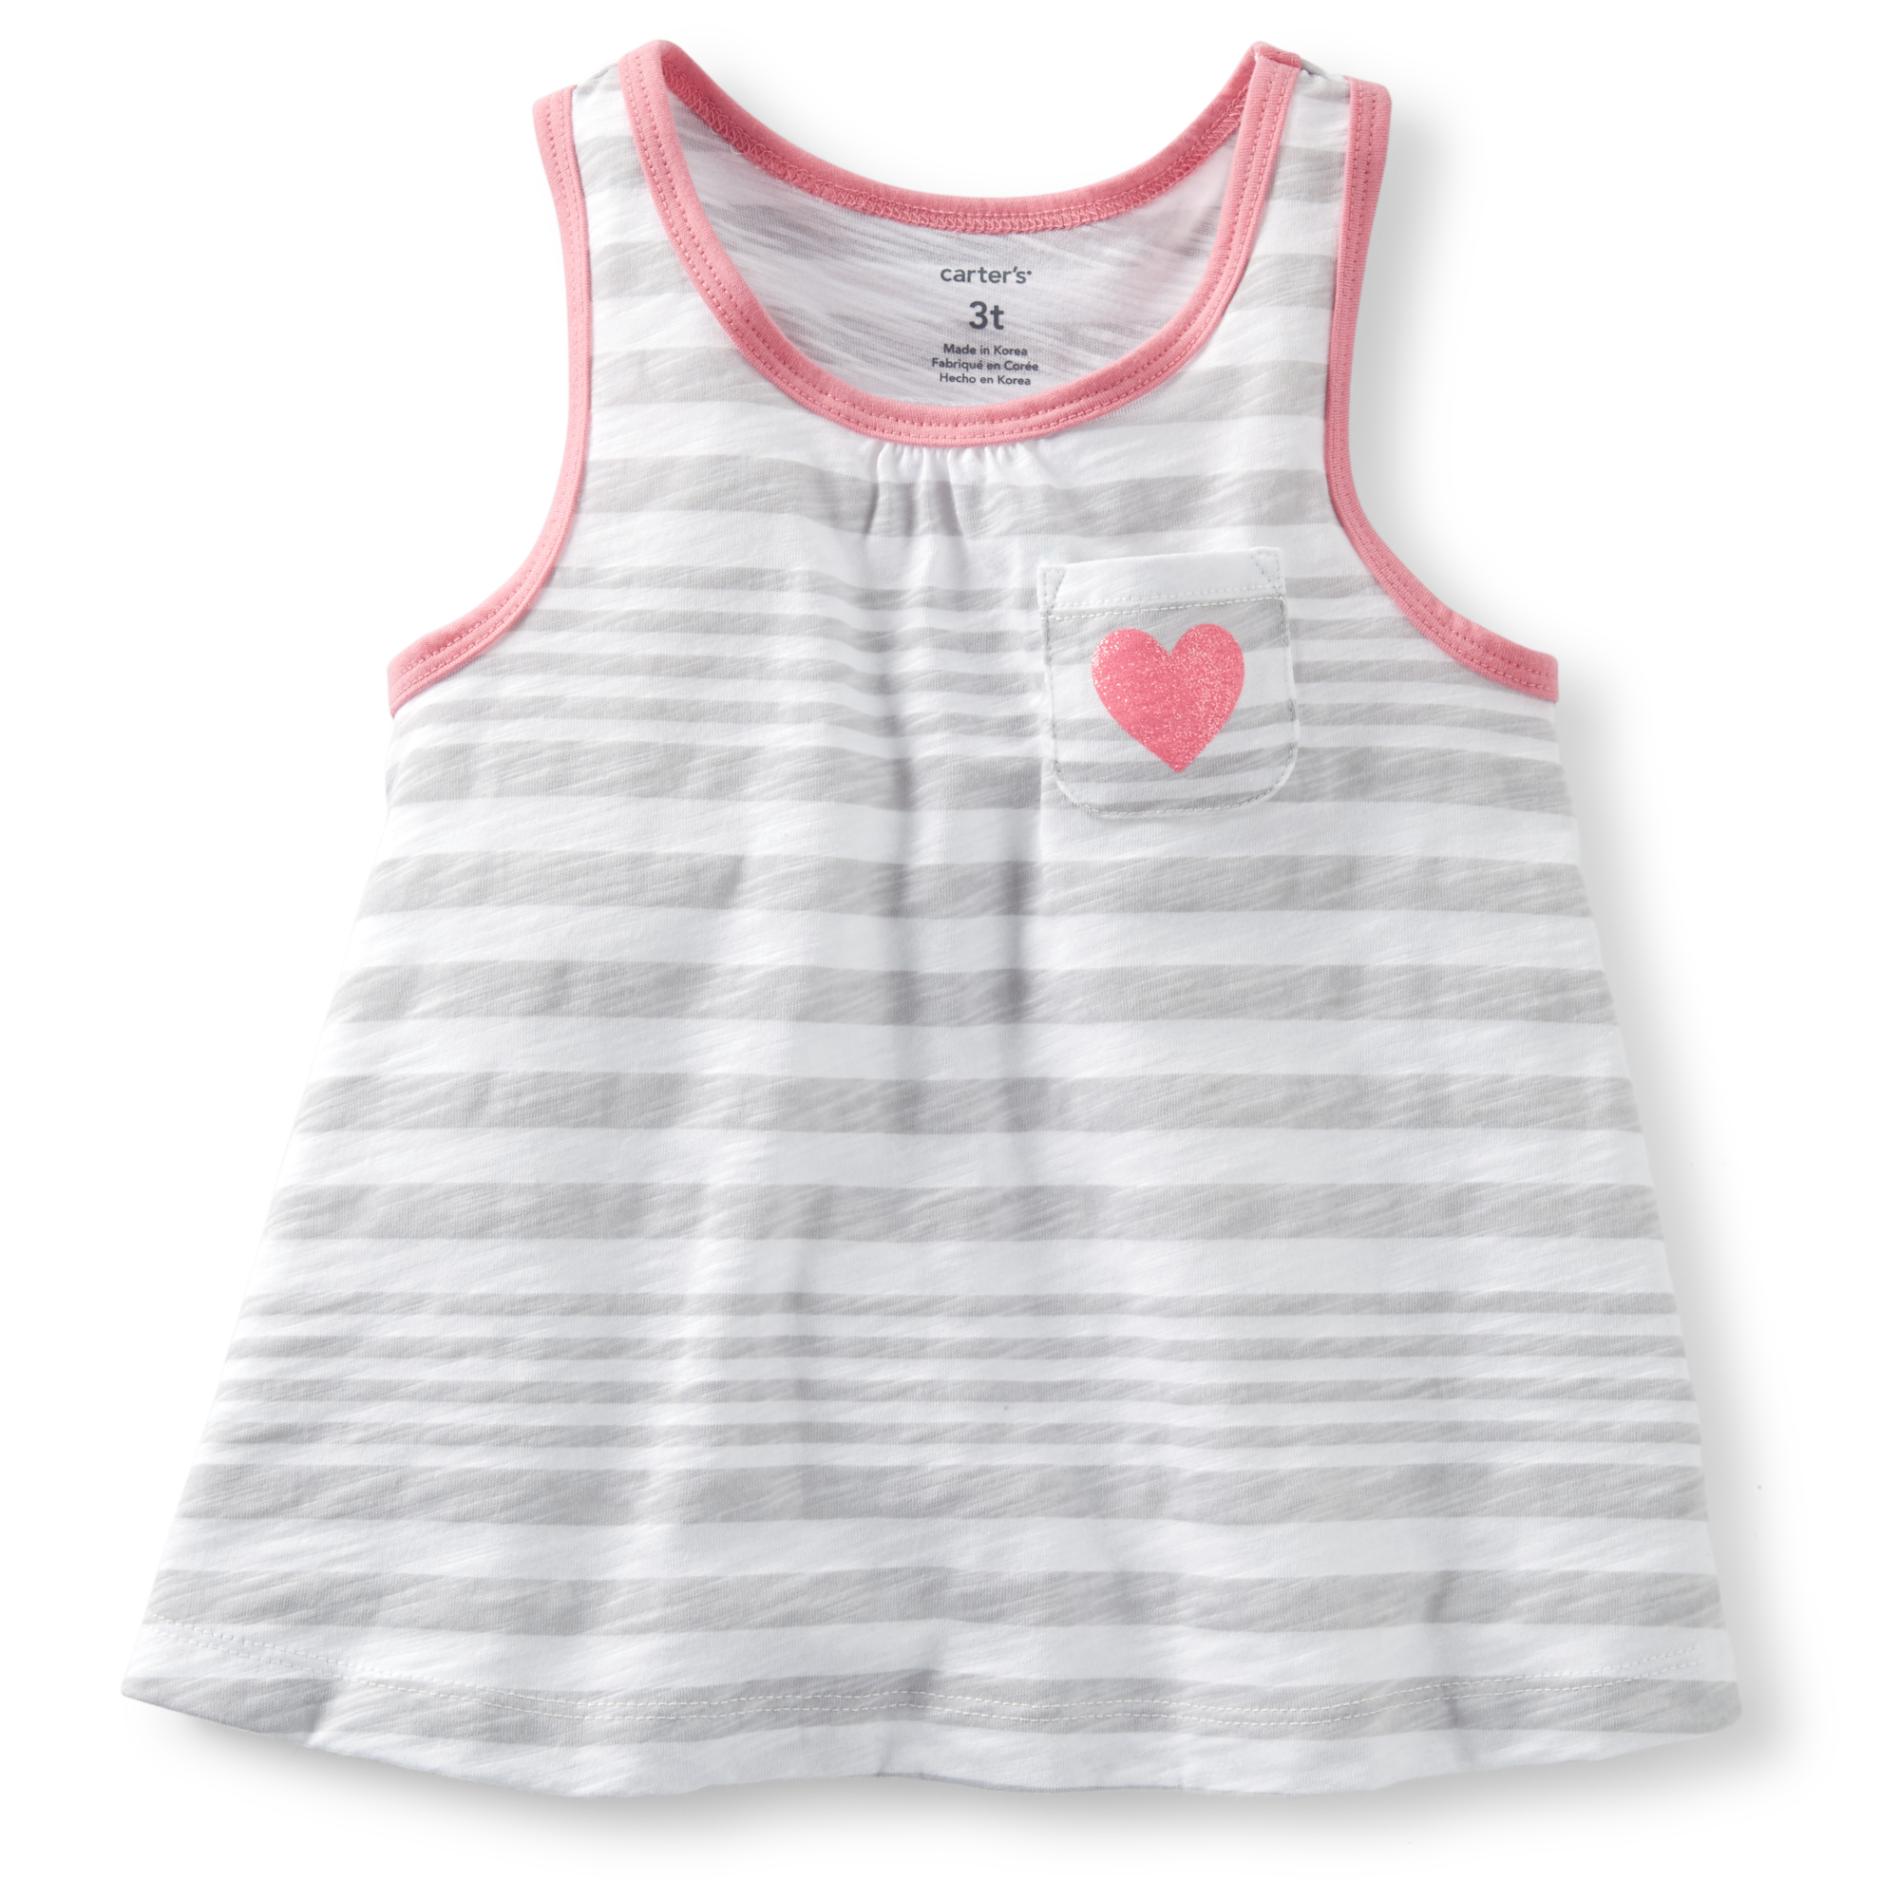 Carter's Toddler Girl's Tank Top - Heart